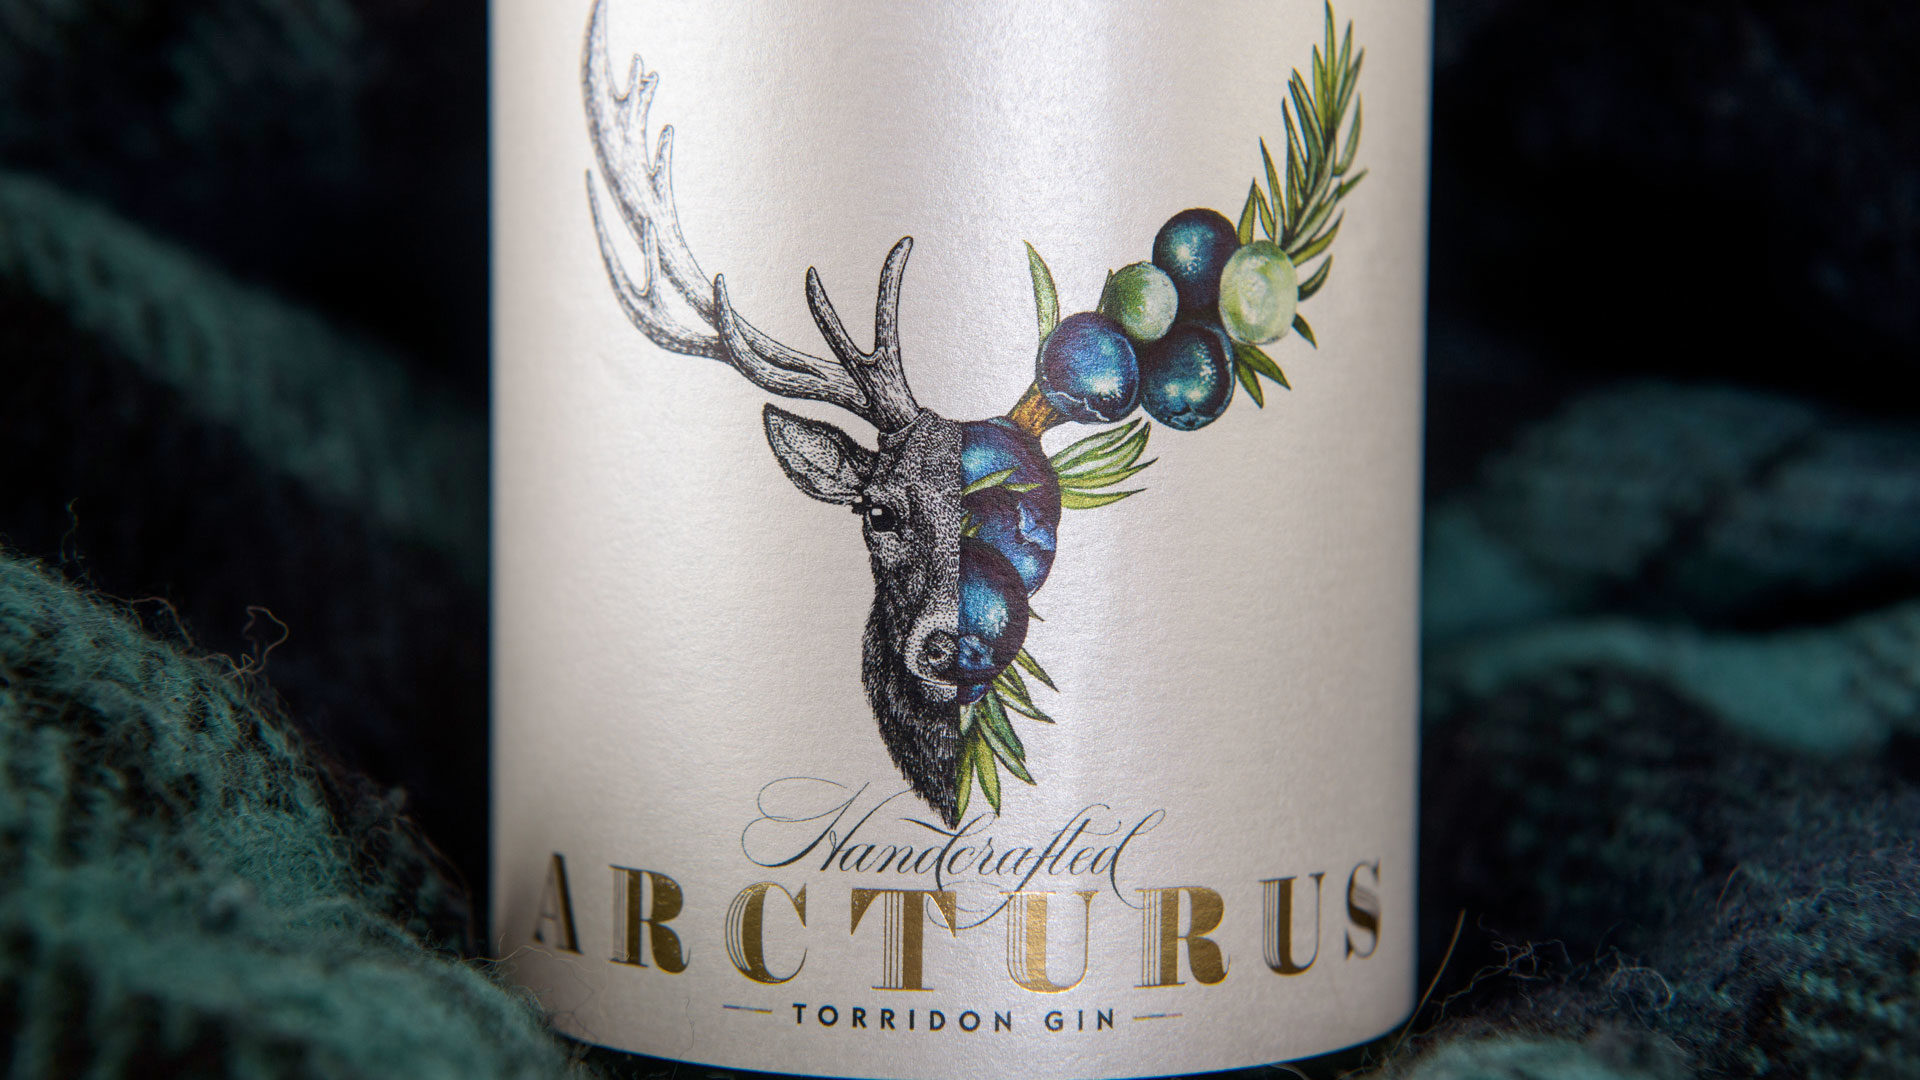 Arcturus Gin